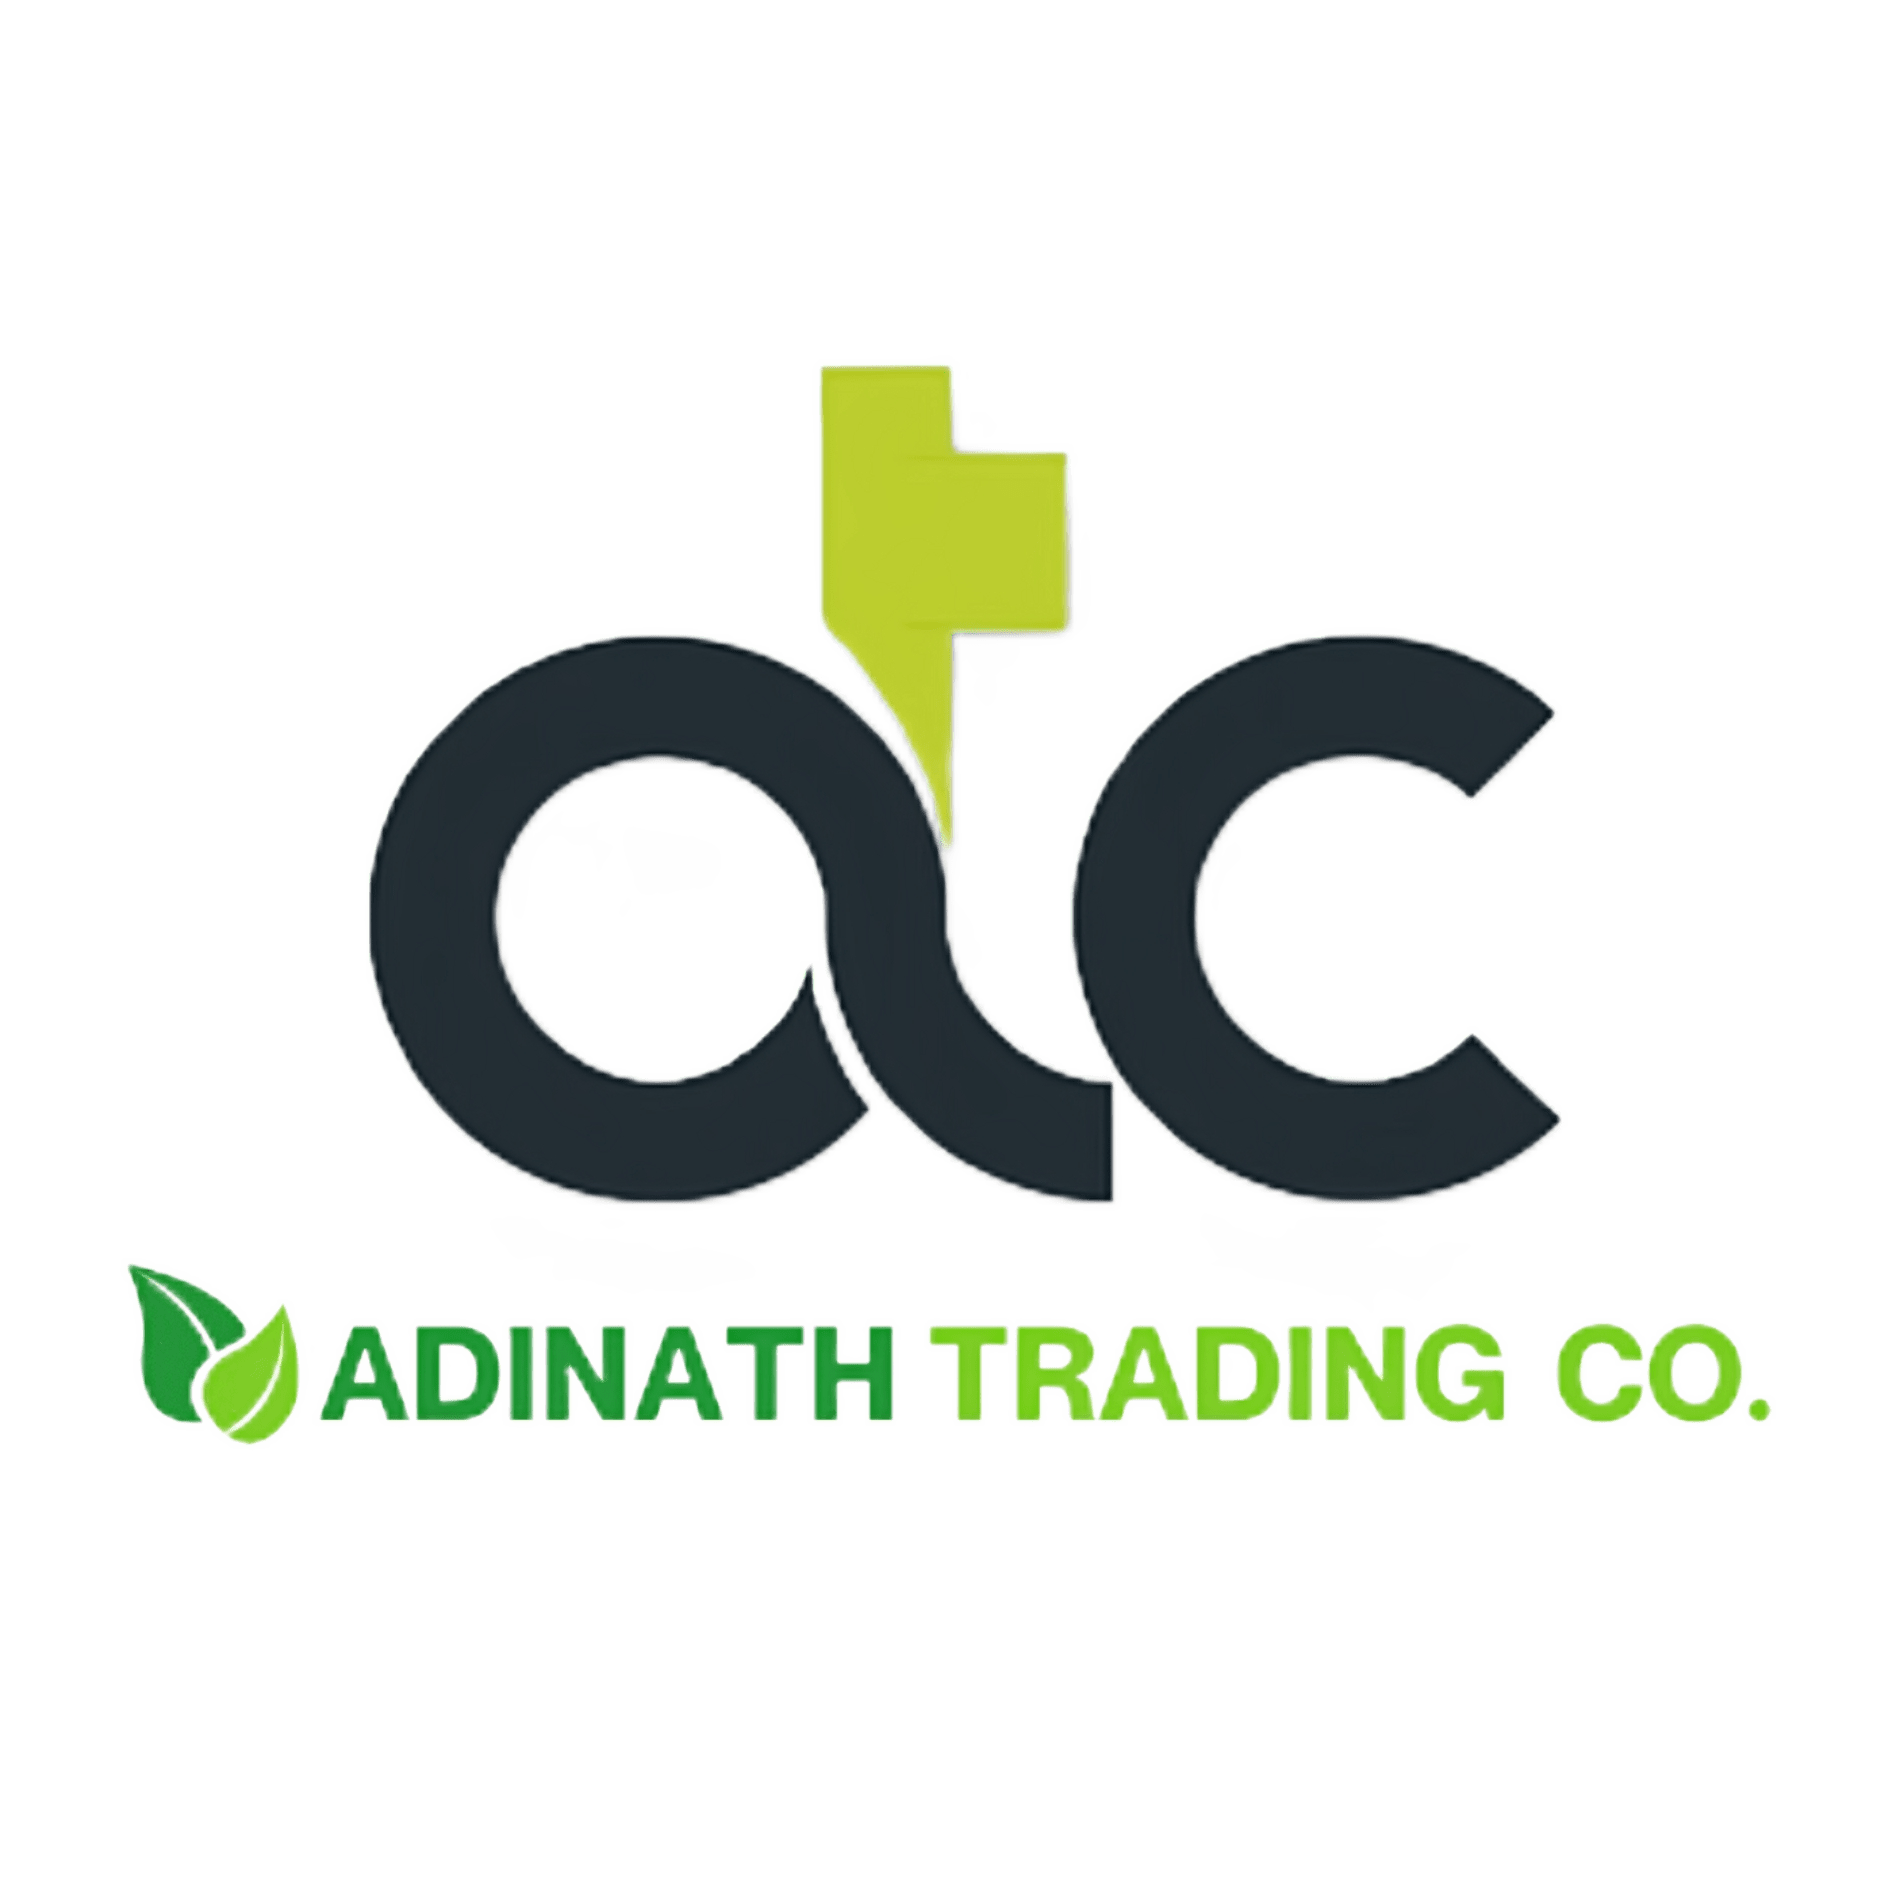 About Adinath Trading Company